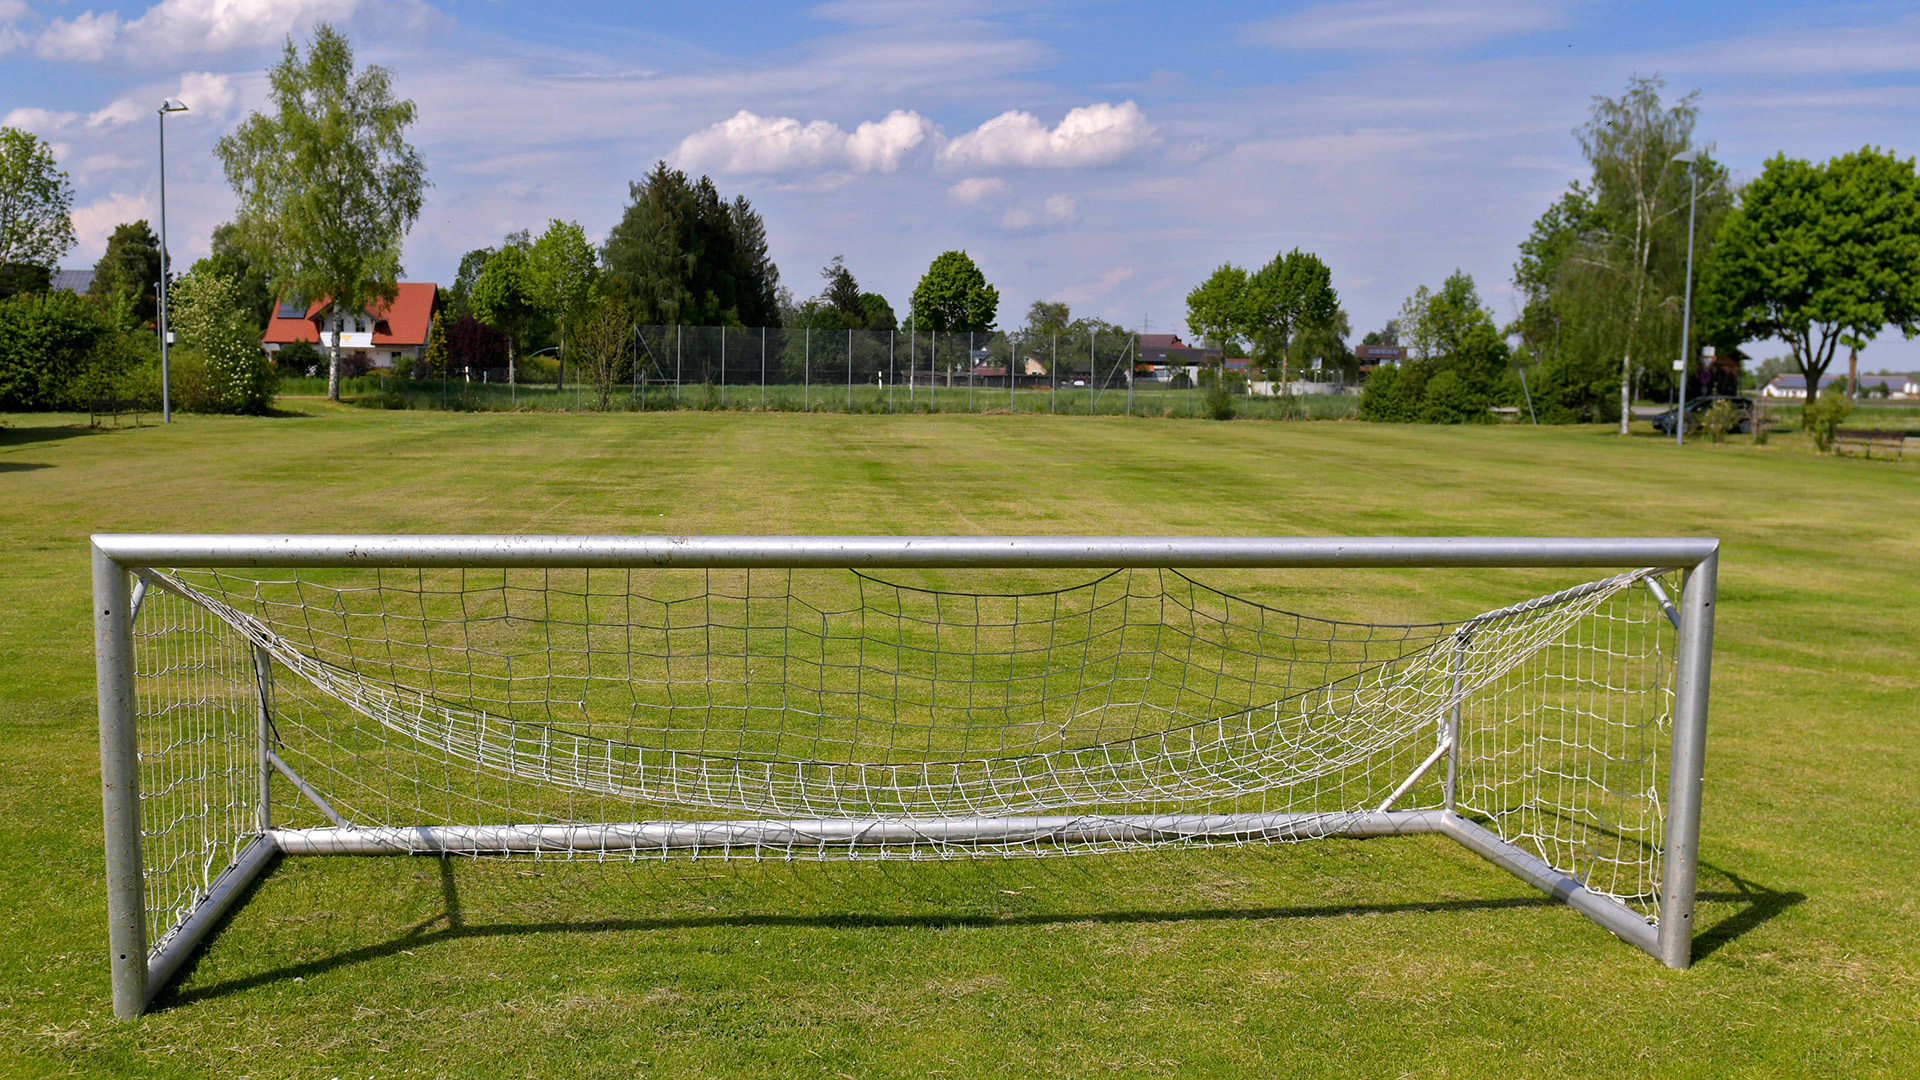 Fußballplatz | Bildquelle: imago images/MiS